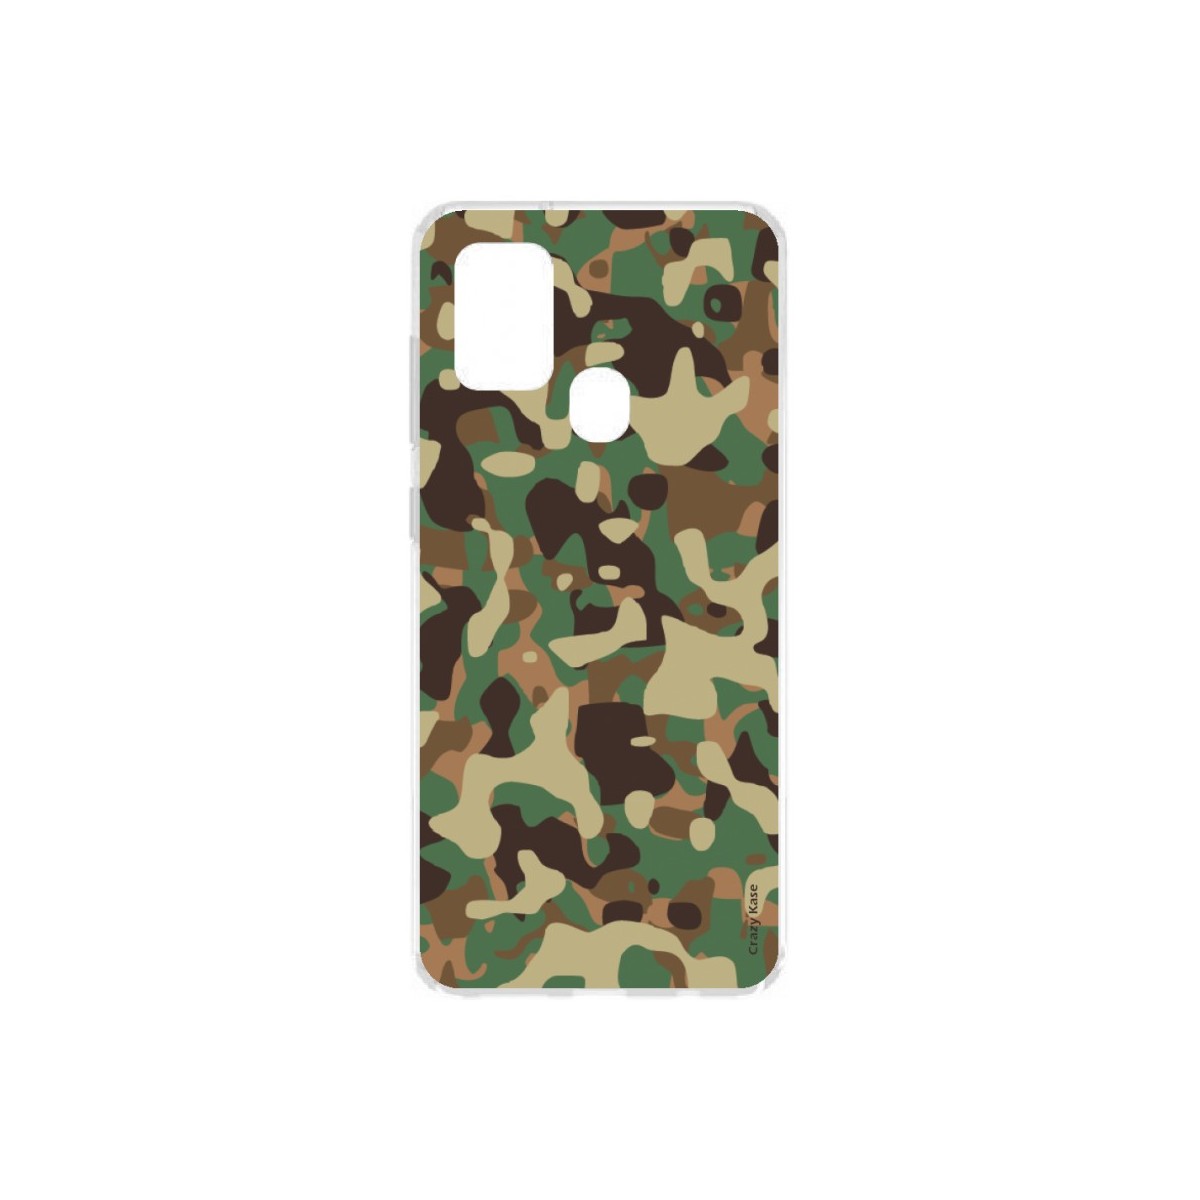 Coque Samsung Galaxy A21s souple Camouflage militaire Crazy Kase